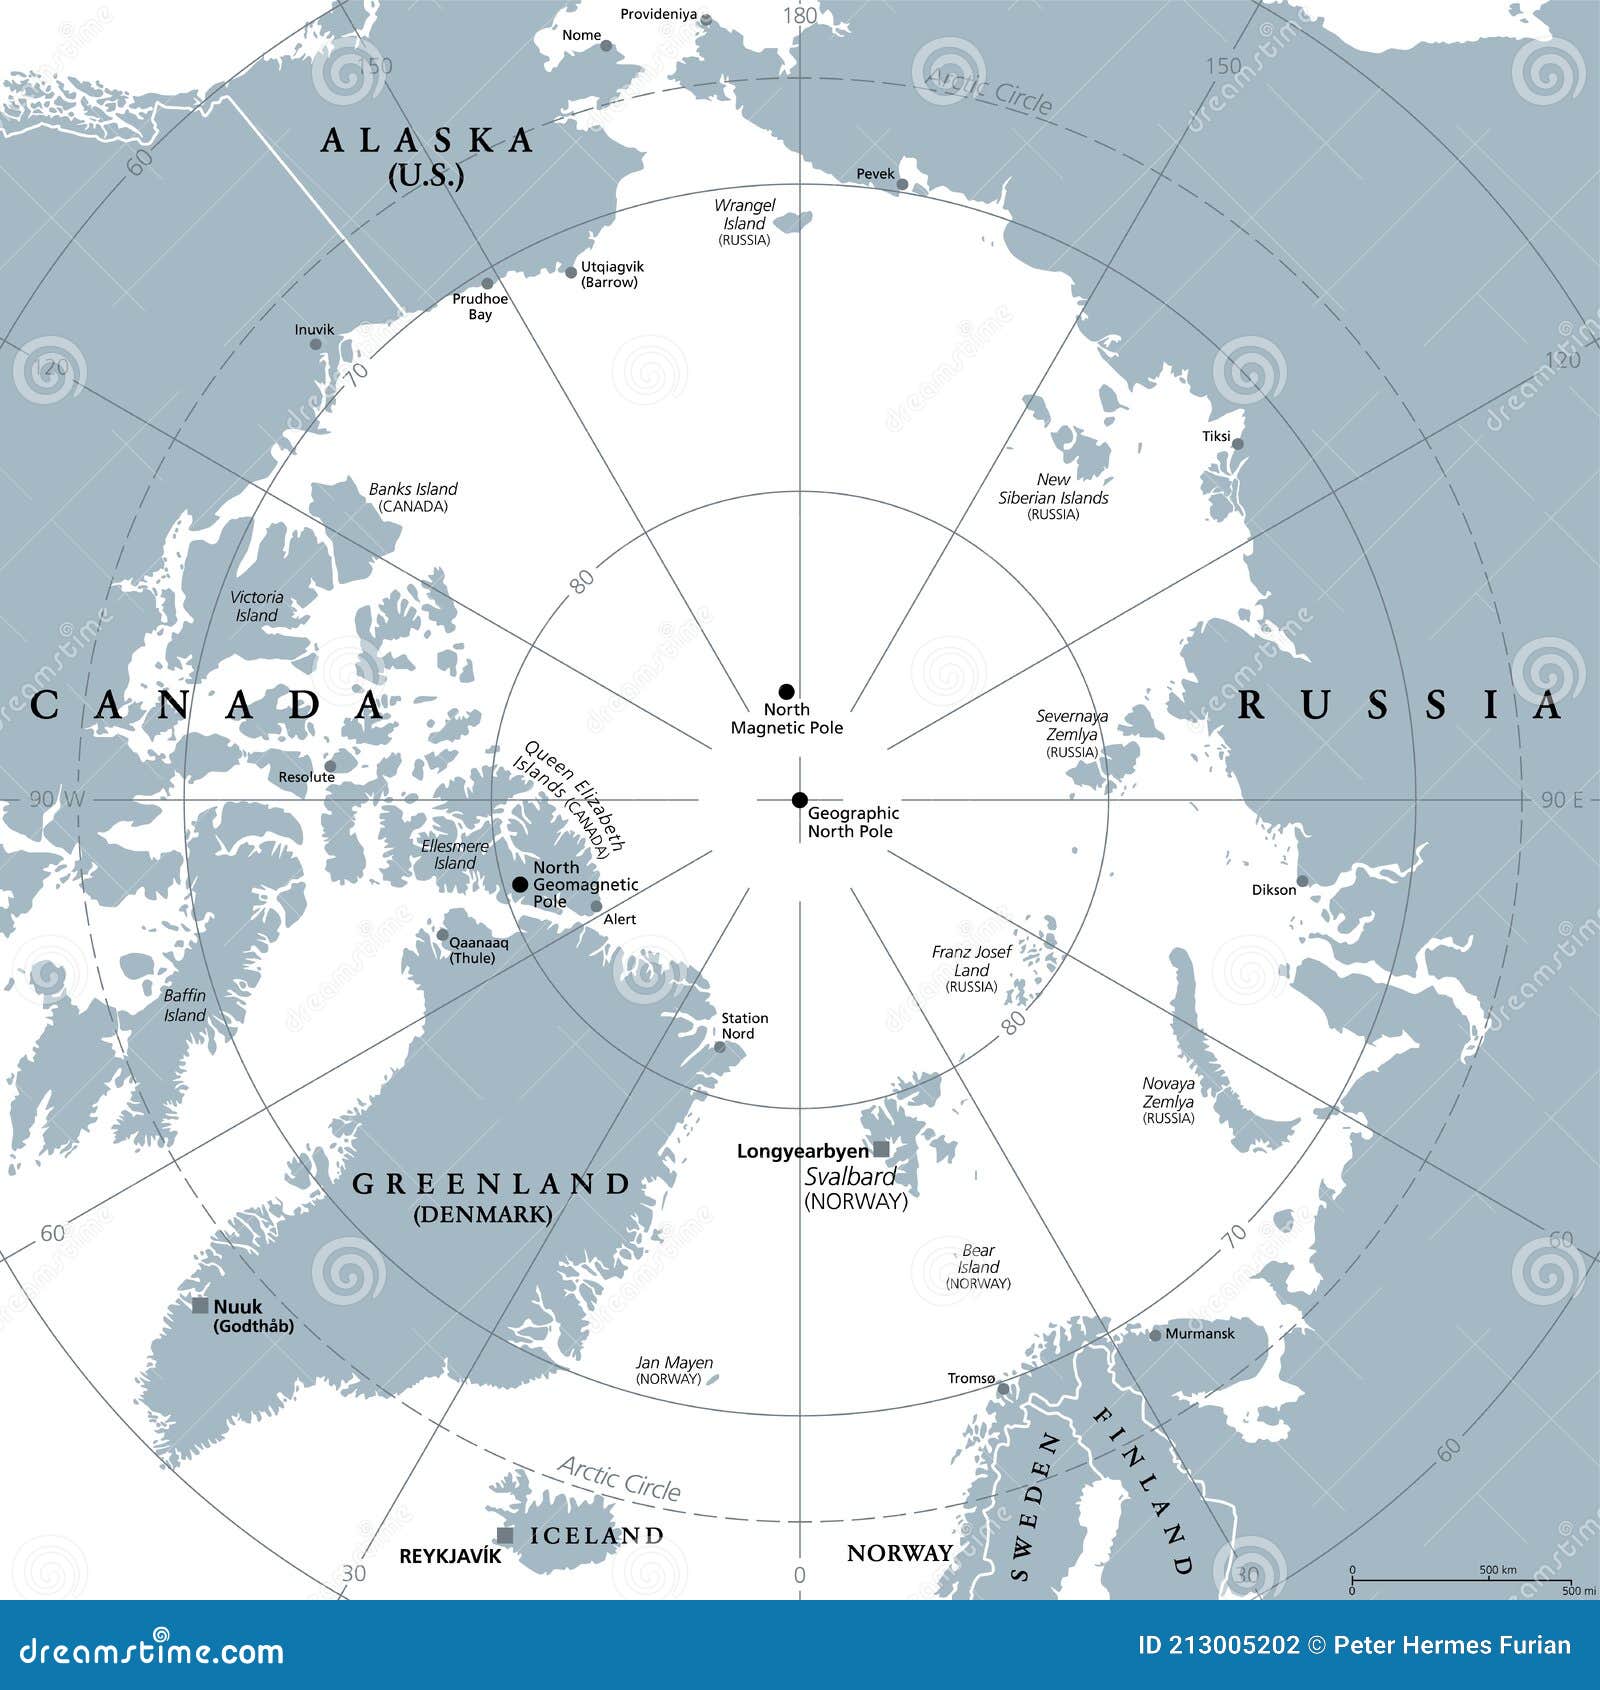 arctic region, polar region around north pole, gray political map